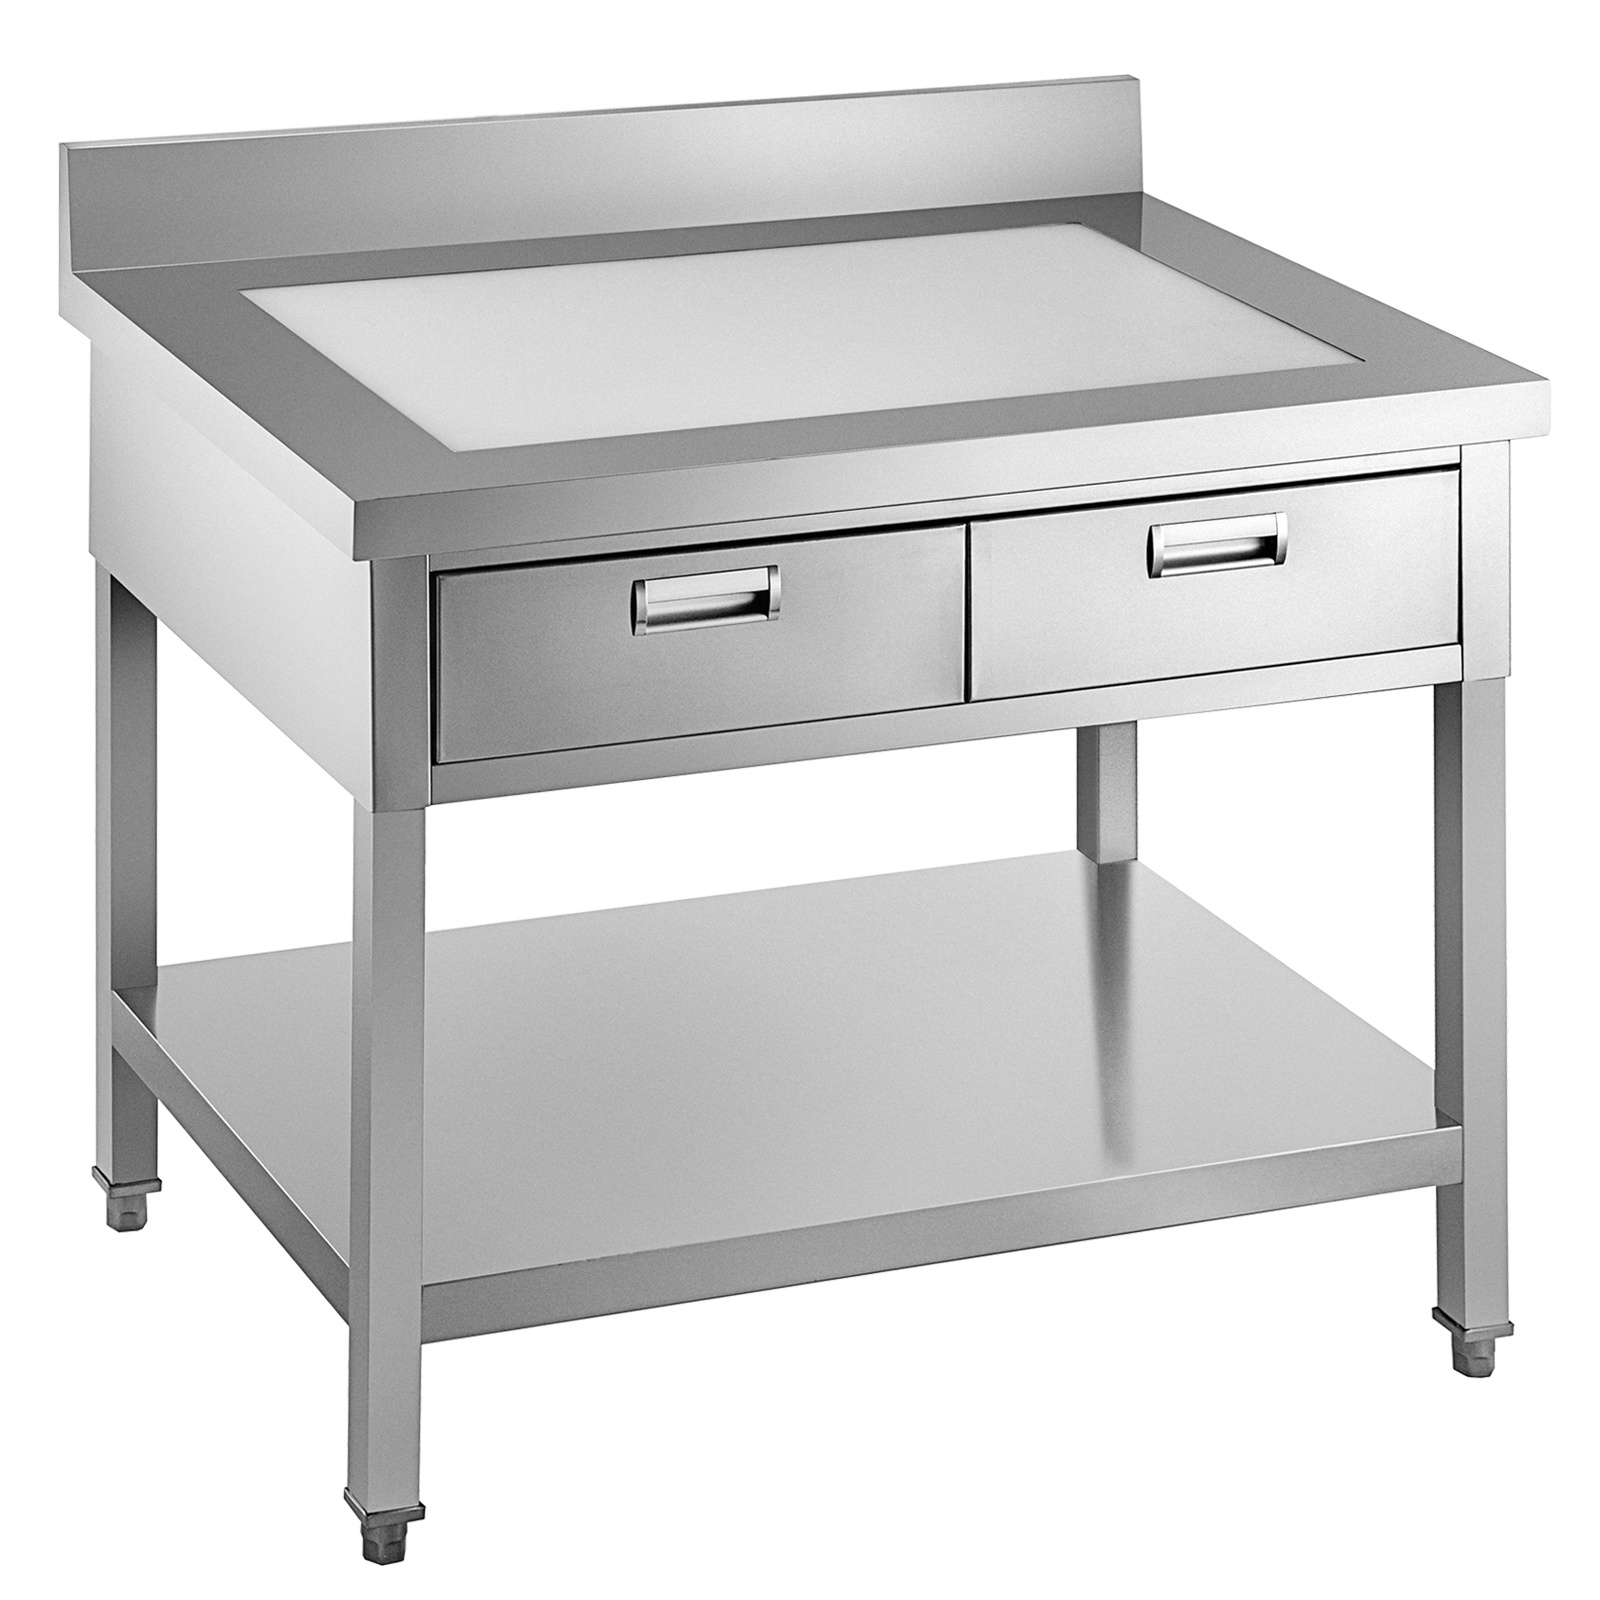 VEVOR Commercial Stainless Steel Restaurant Kitchen Prep Work Table with Drawer eBay